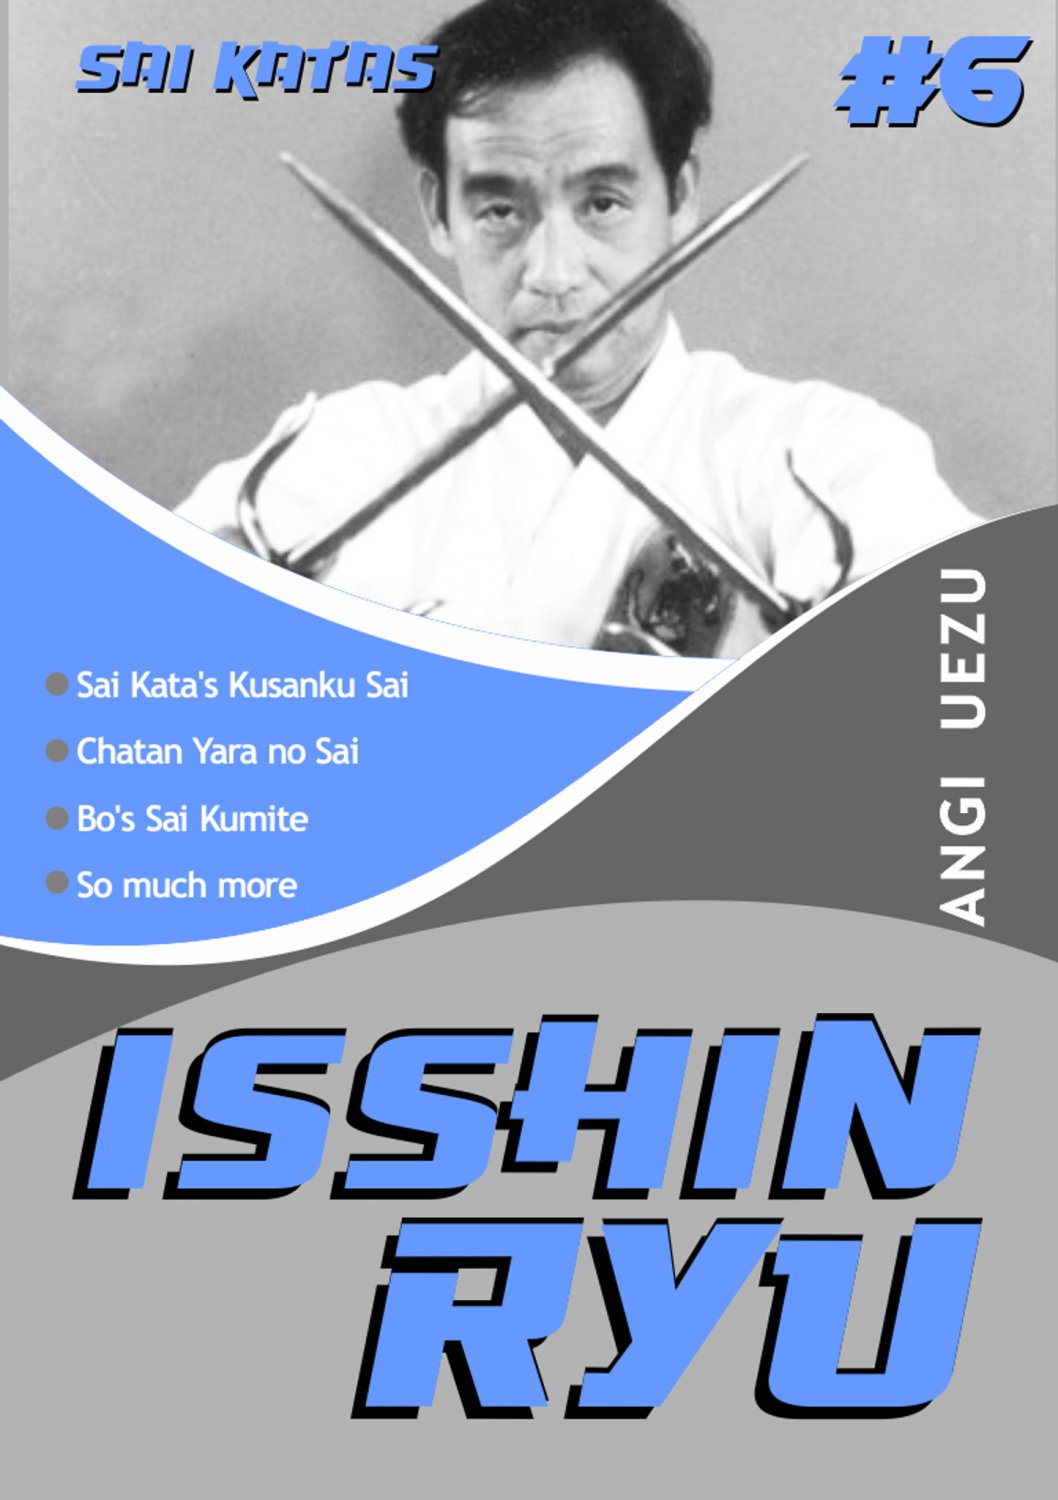 VD9625A-VD DIGITAL VIDEO  Isshin Ryu Karate Sai Katas #6: Kusanku, Bo Sai sparrng Angi Uezu